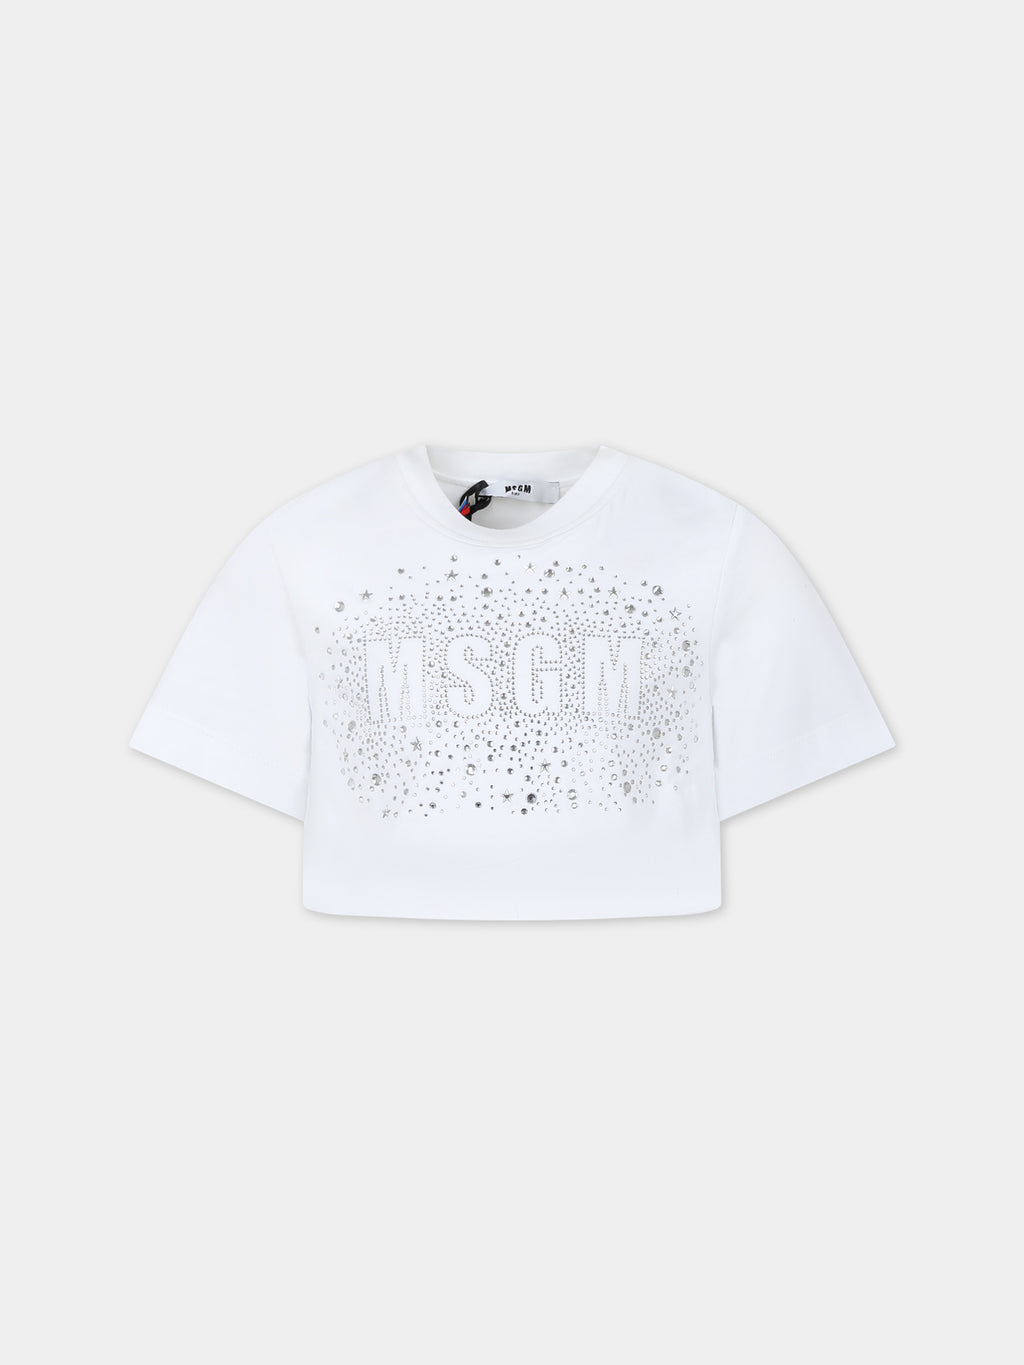 T-shirt bianca per bambina con logo e stelle